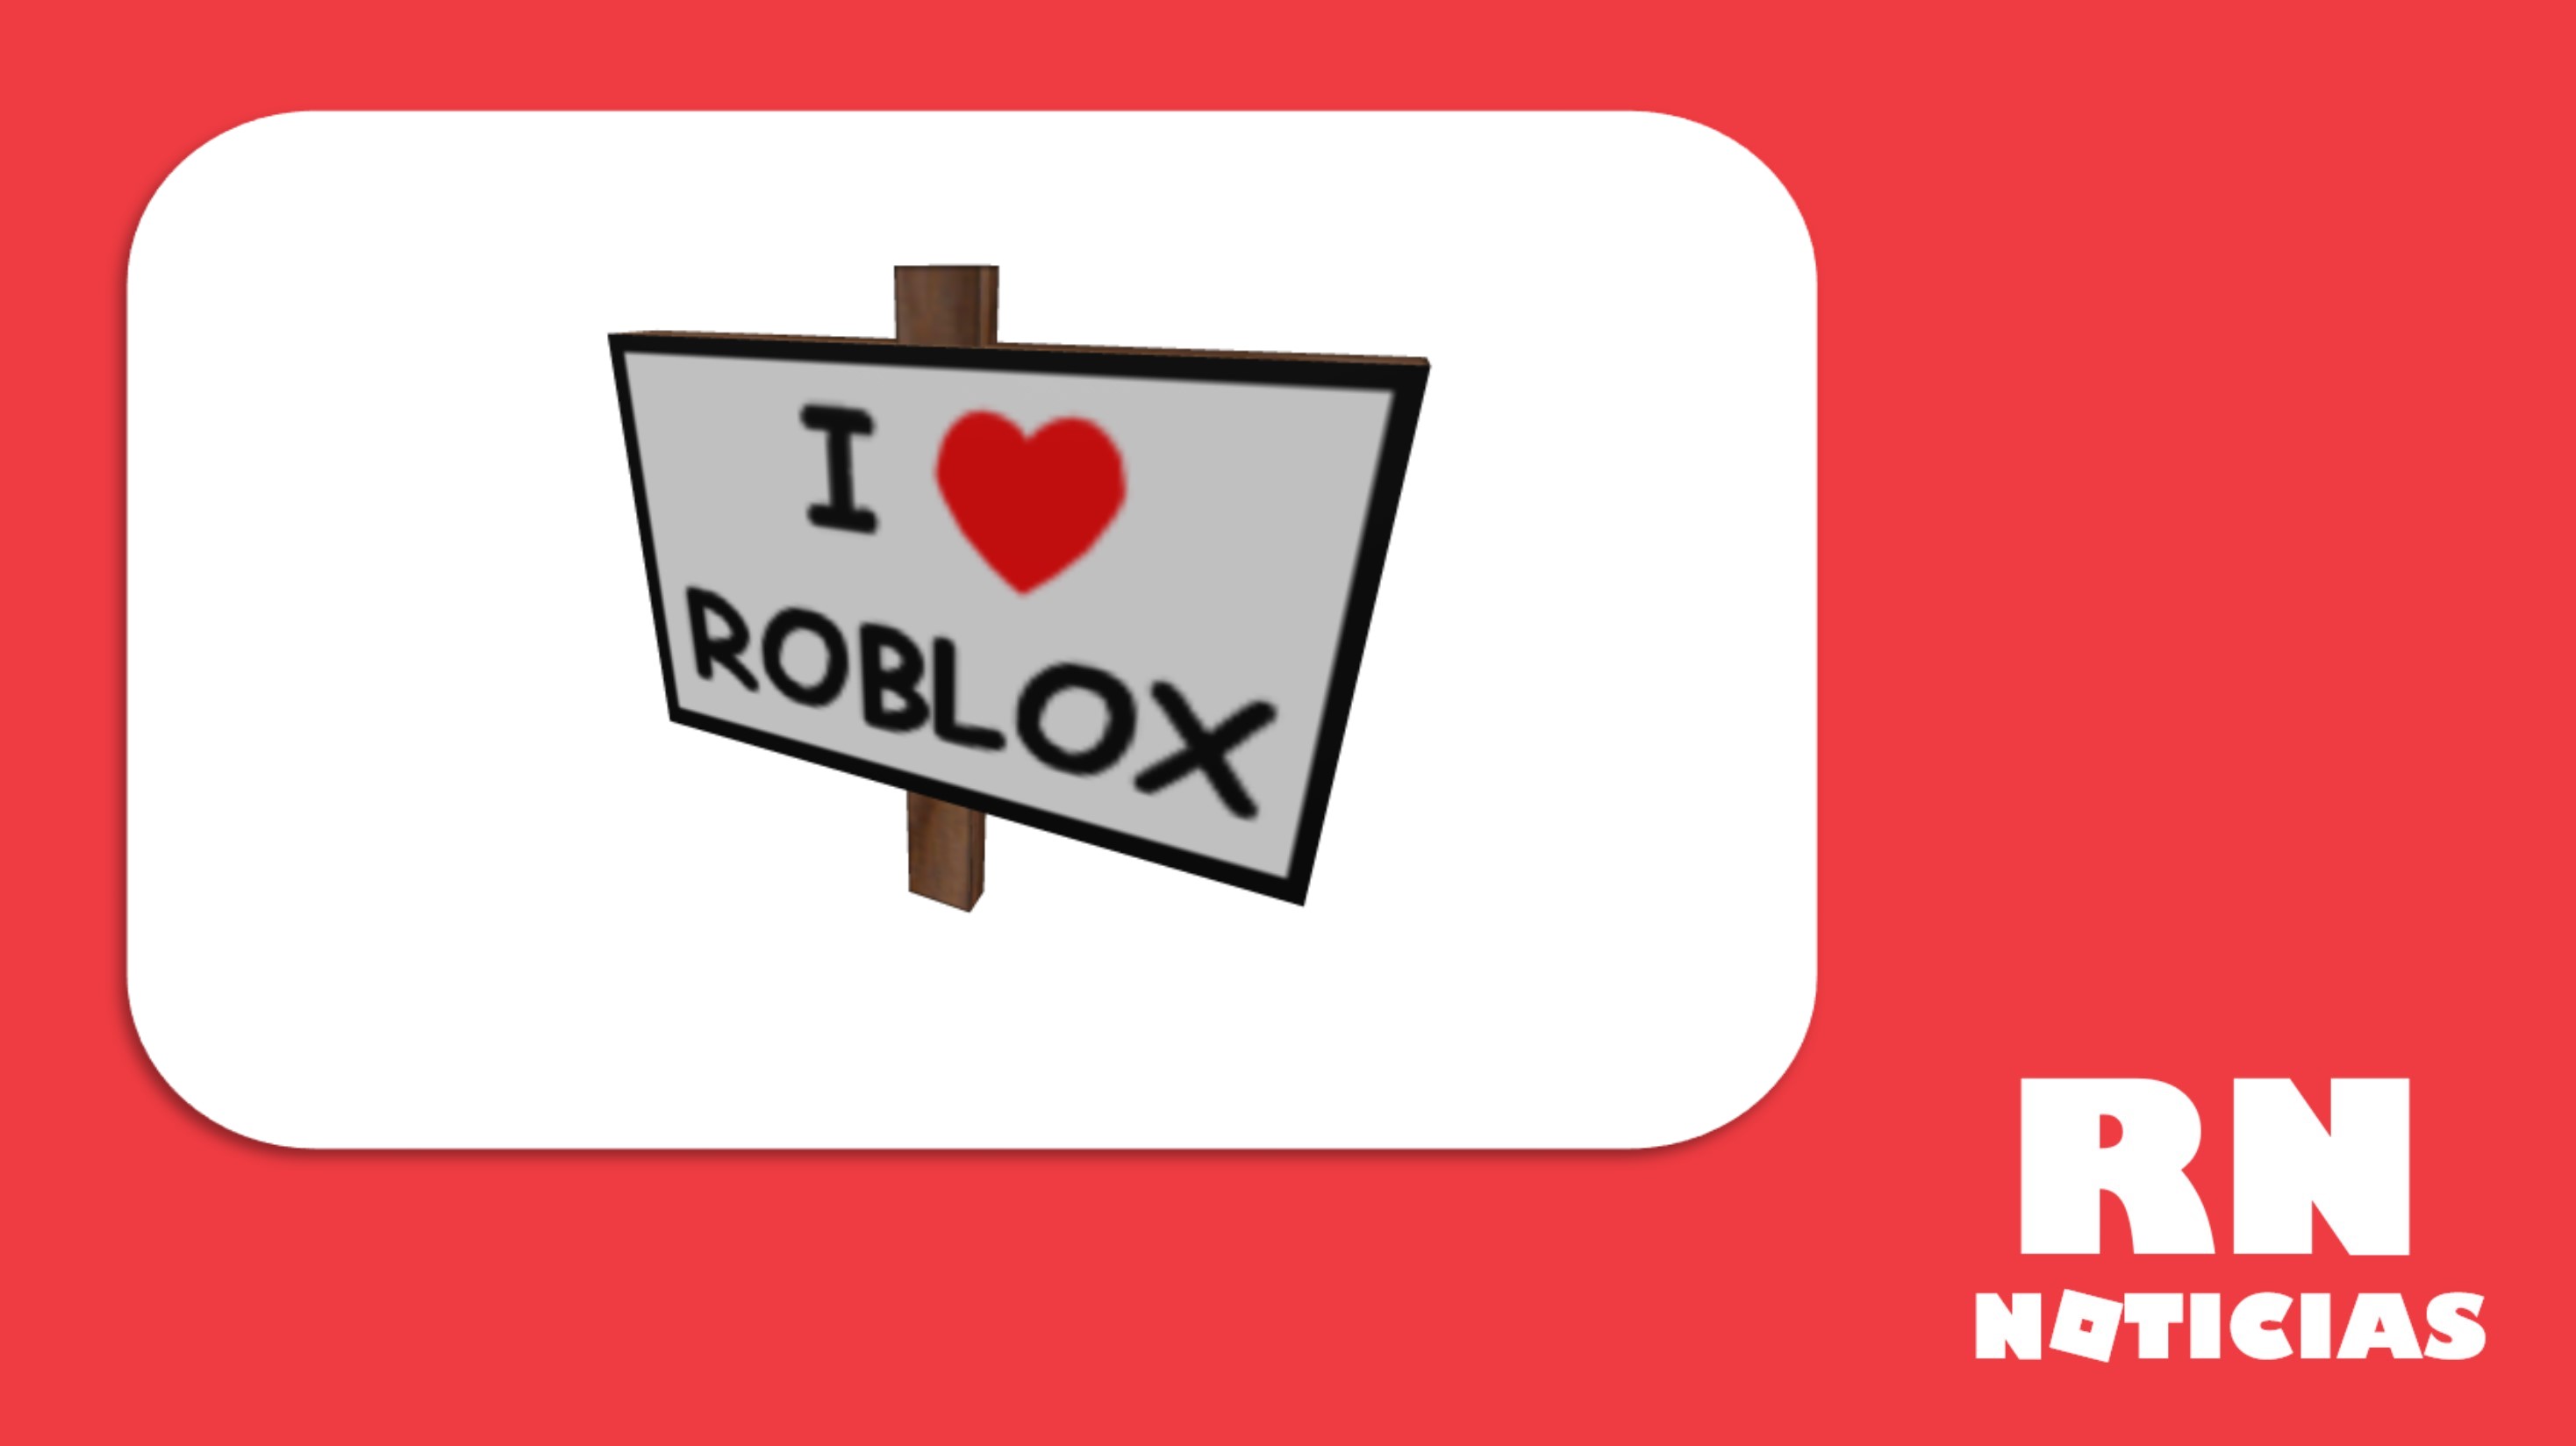 RN Noticias — Roblox 📰🎃 on X: #RDC21